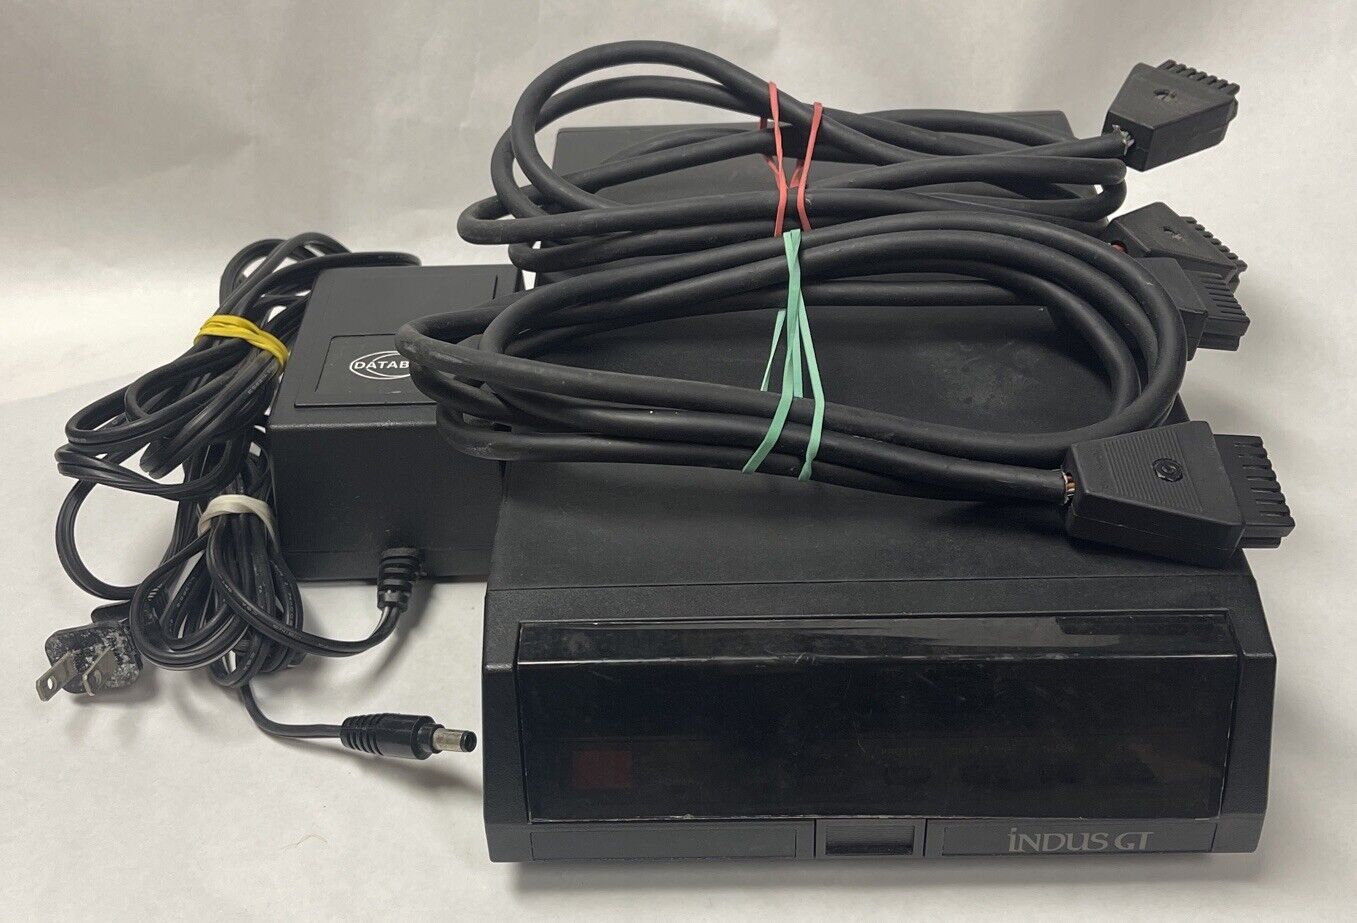 Vintage Indus GT Floppy Drive for Atari 400, 800, 800XL Tested Read Description